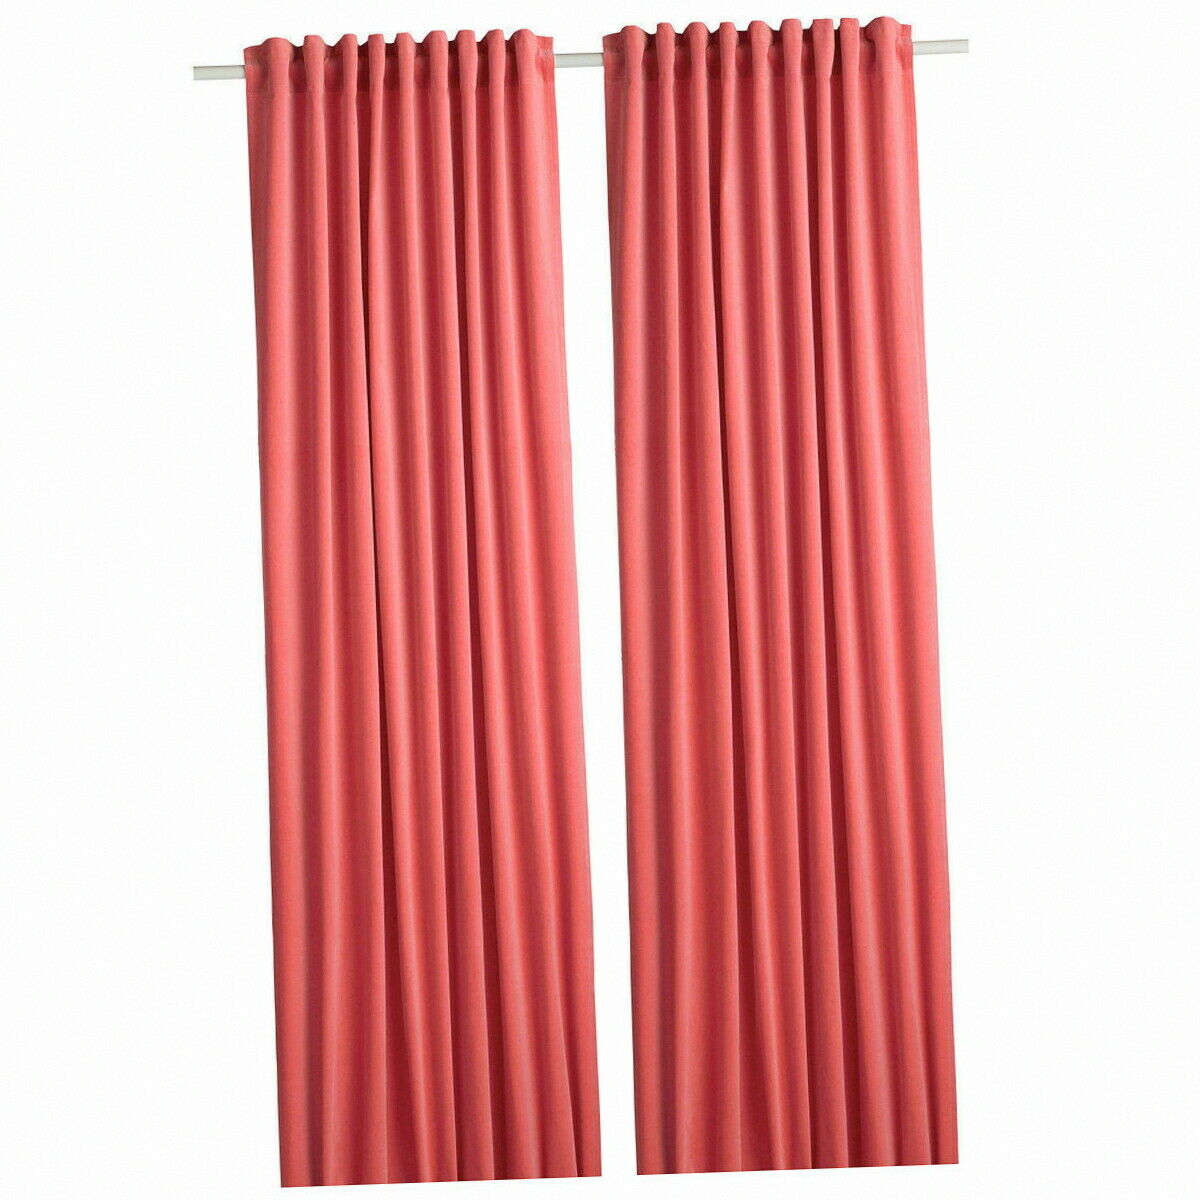 IKEA SANELA Curtains 55x118" 2 Panels (1 Pair) Light Brown Red Room Darkening 304.444.87